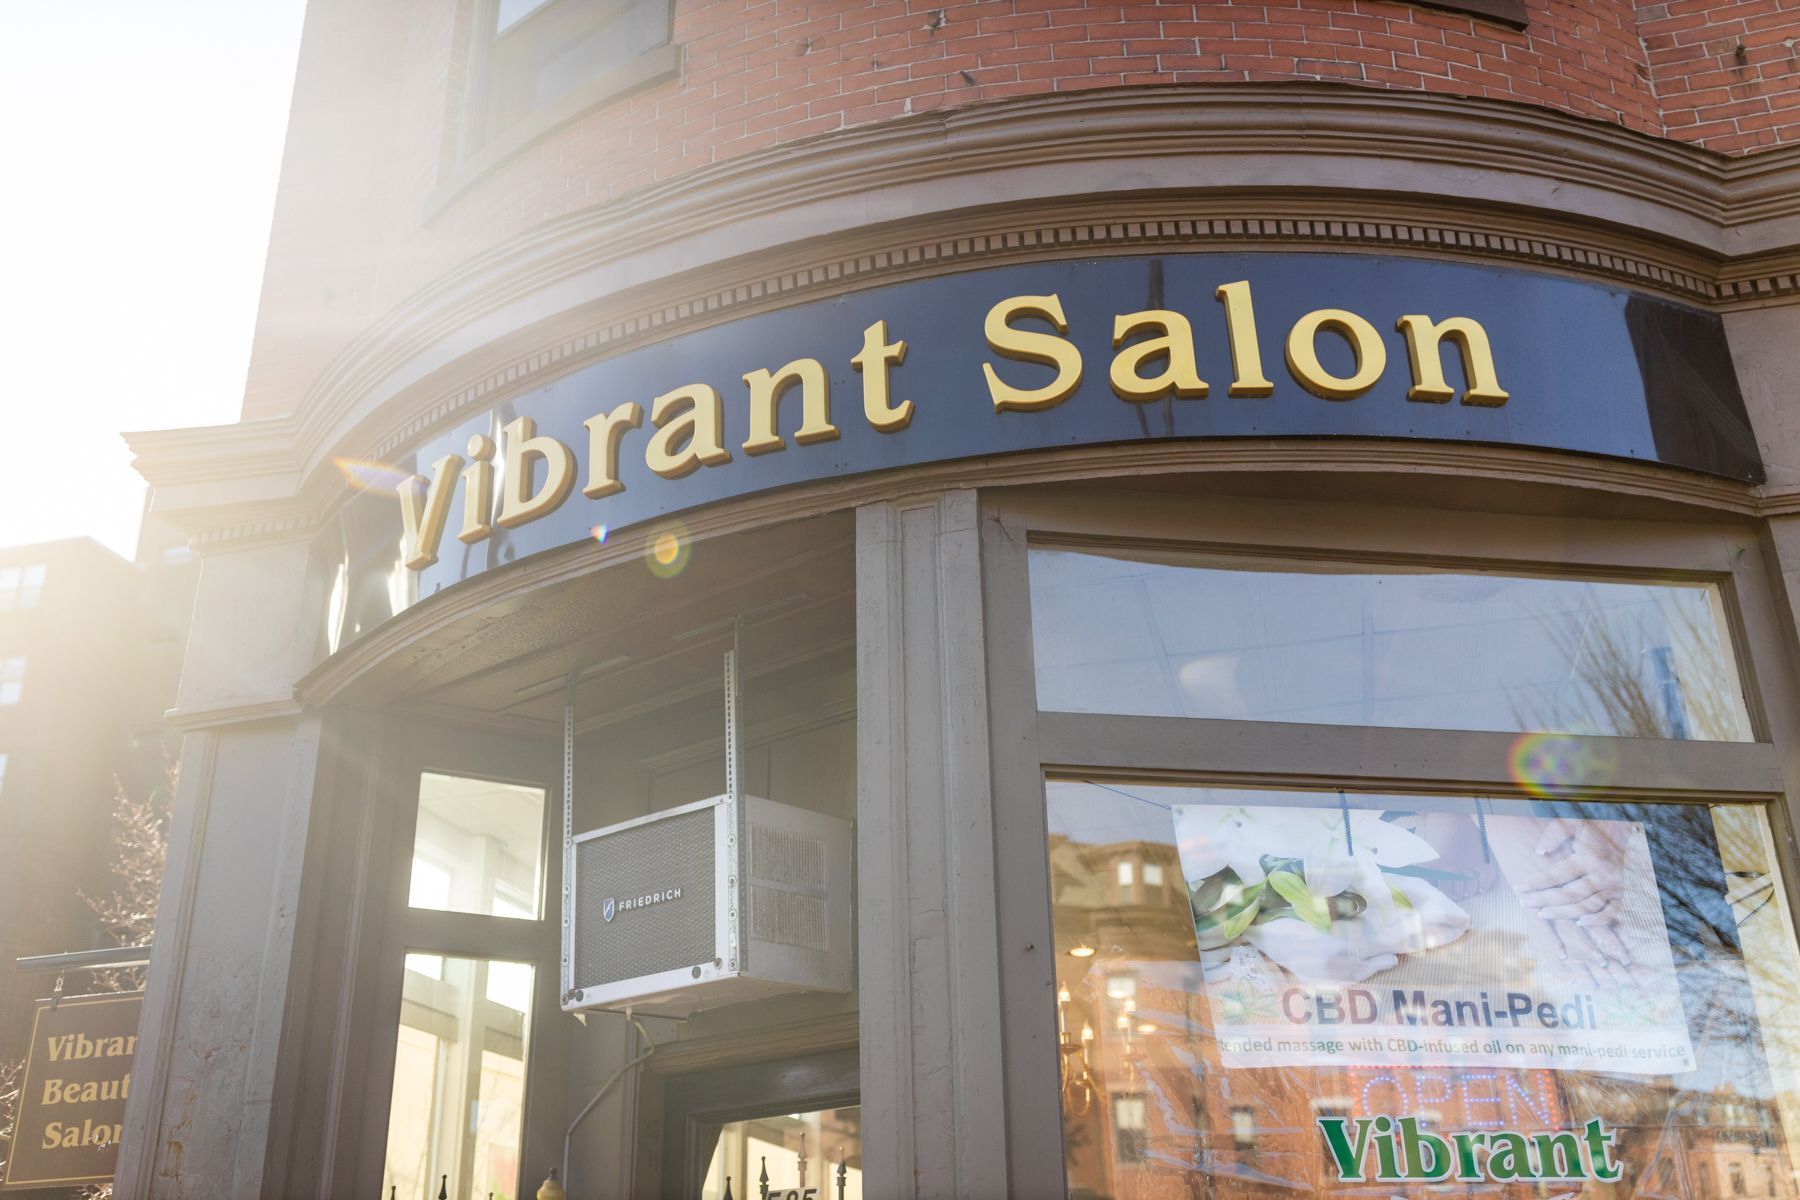 Vibrant Beauty Salon - Boston - Book Online - Prices, Reviews, Photos